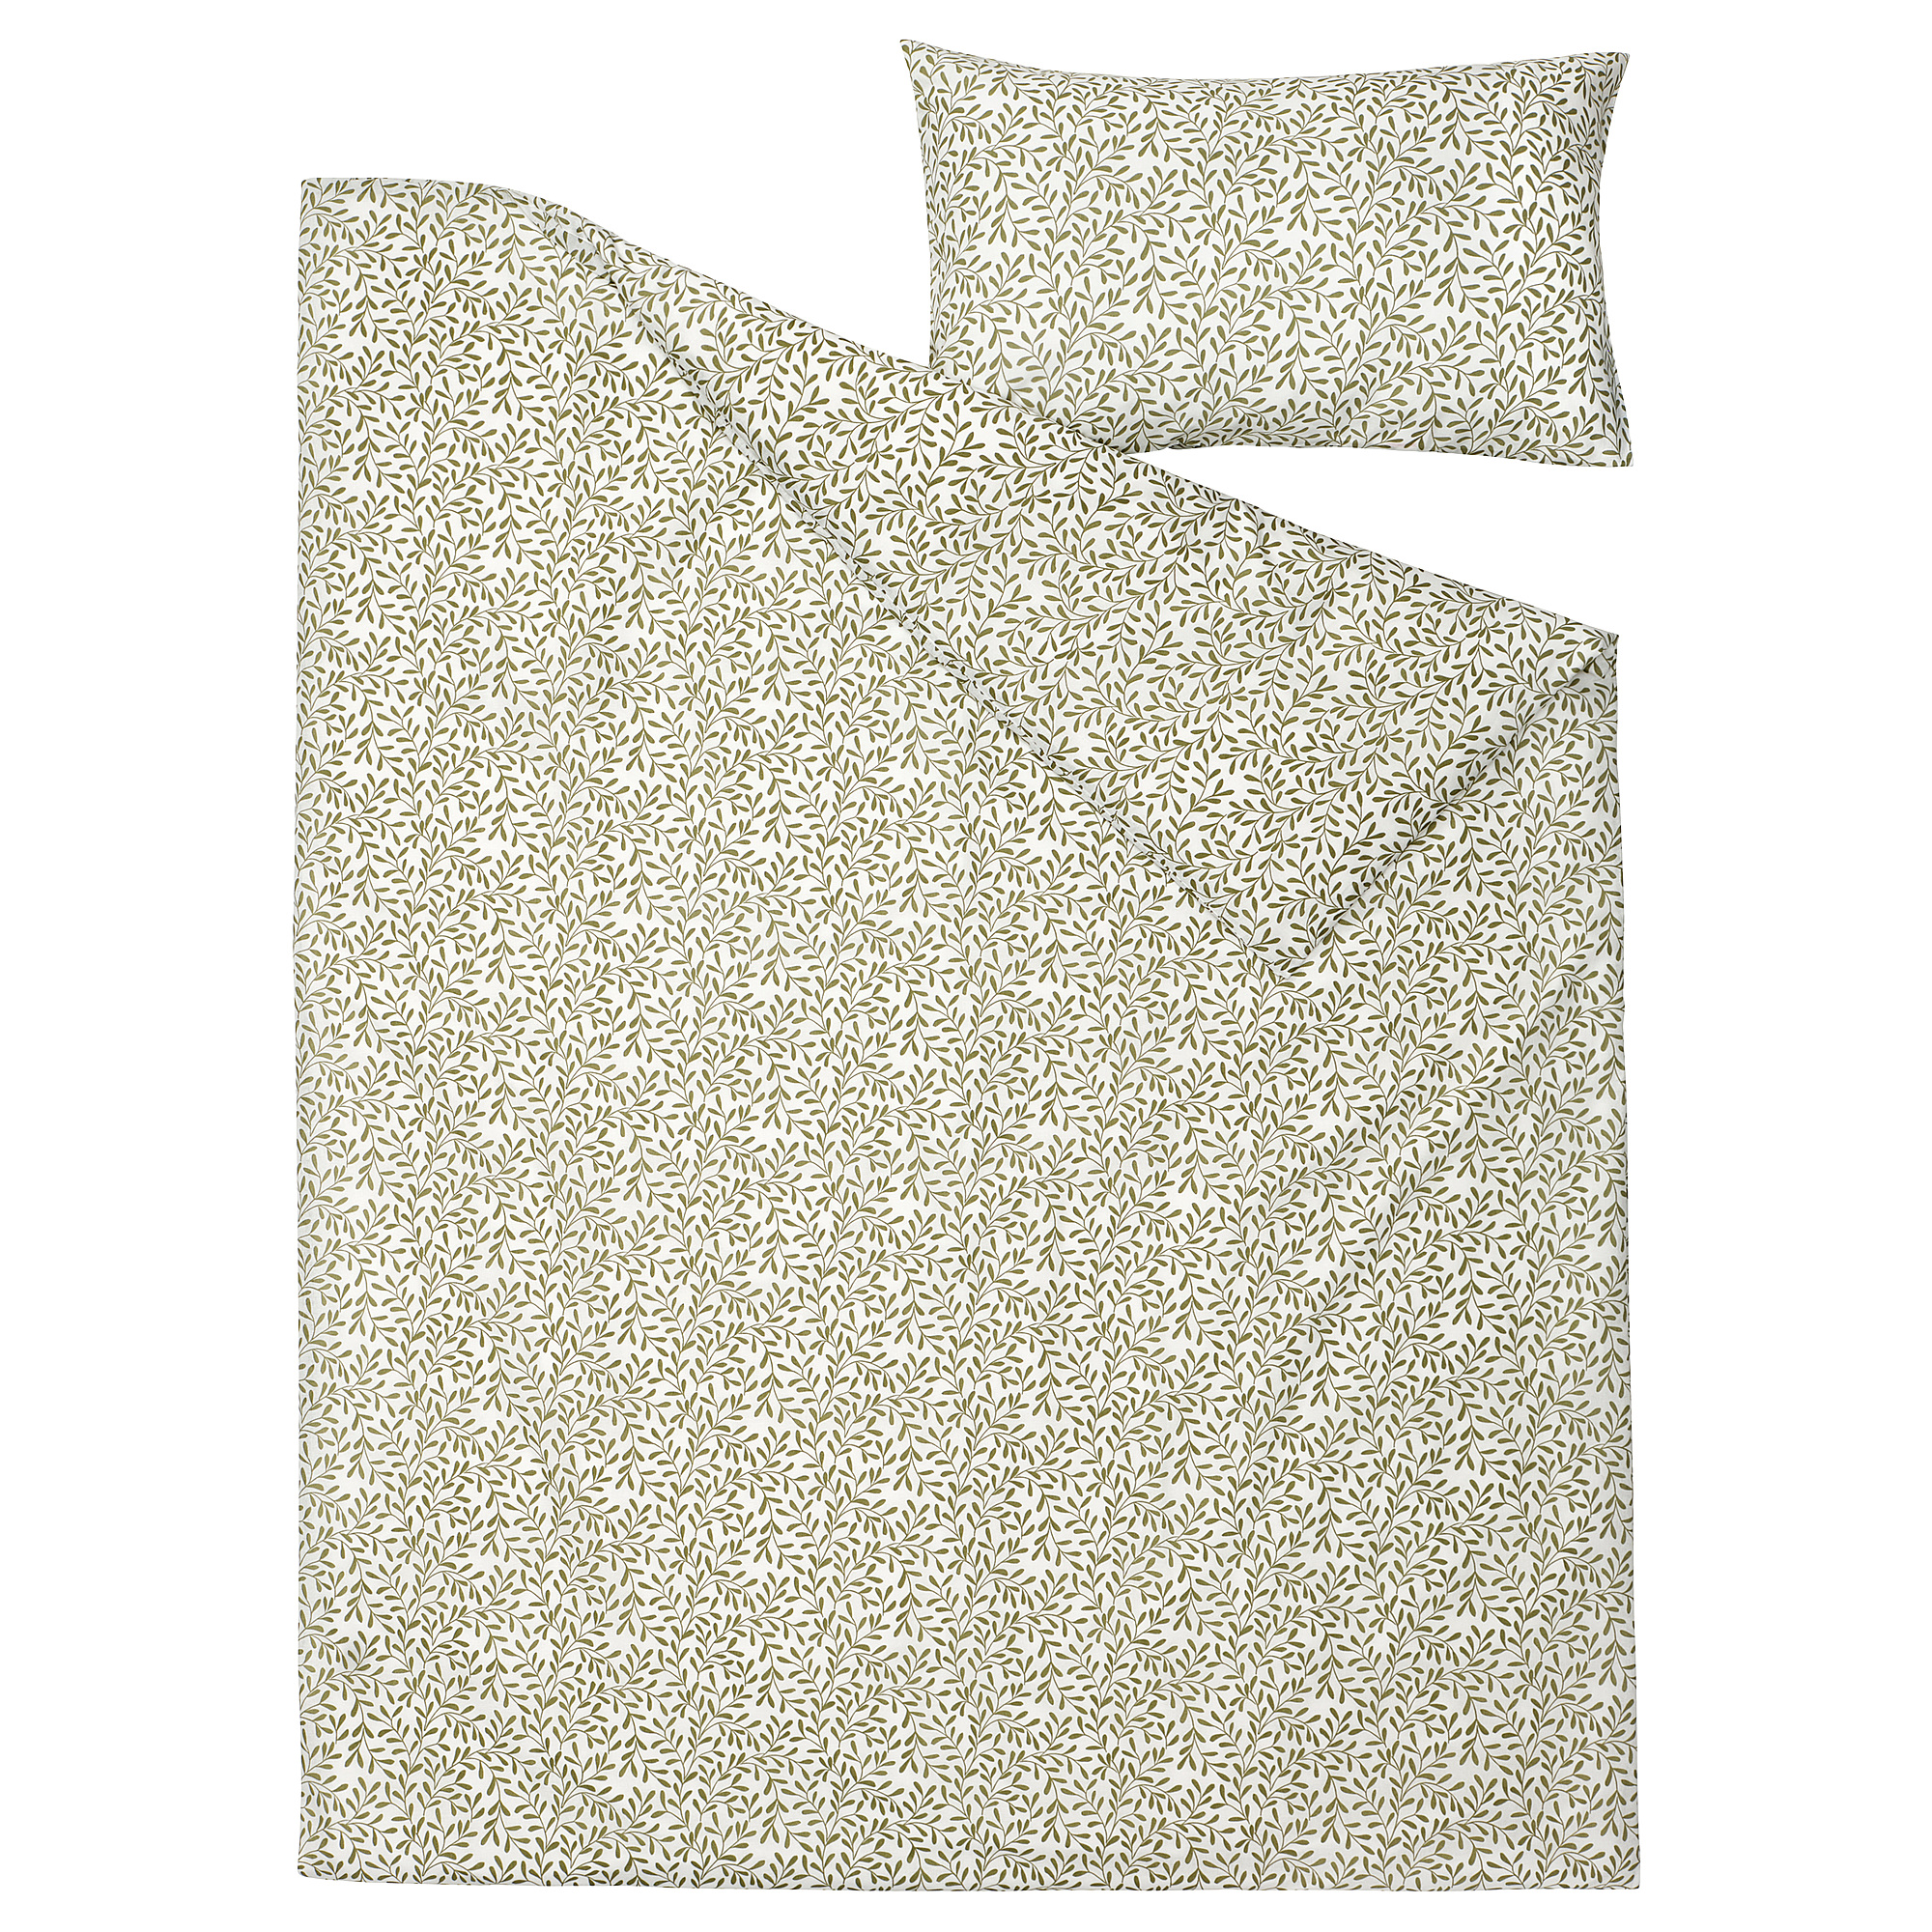 SORGMANTEL duvet cover and pillowcase